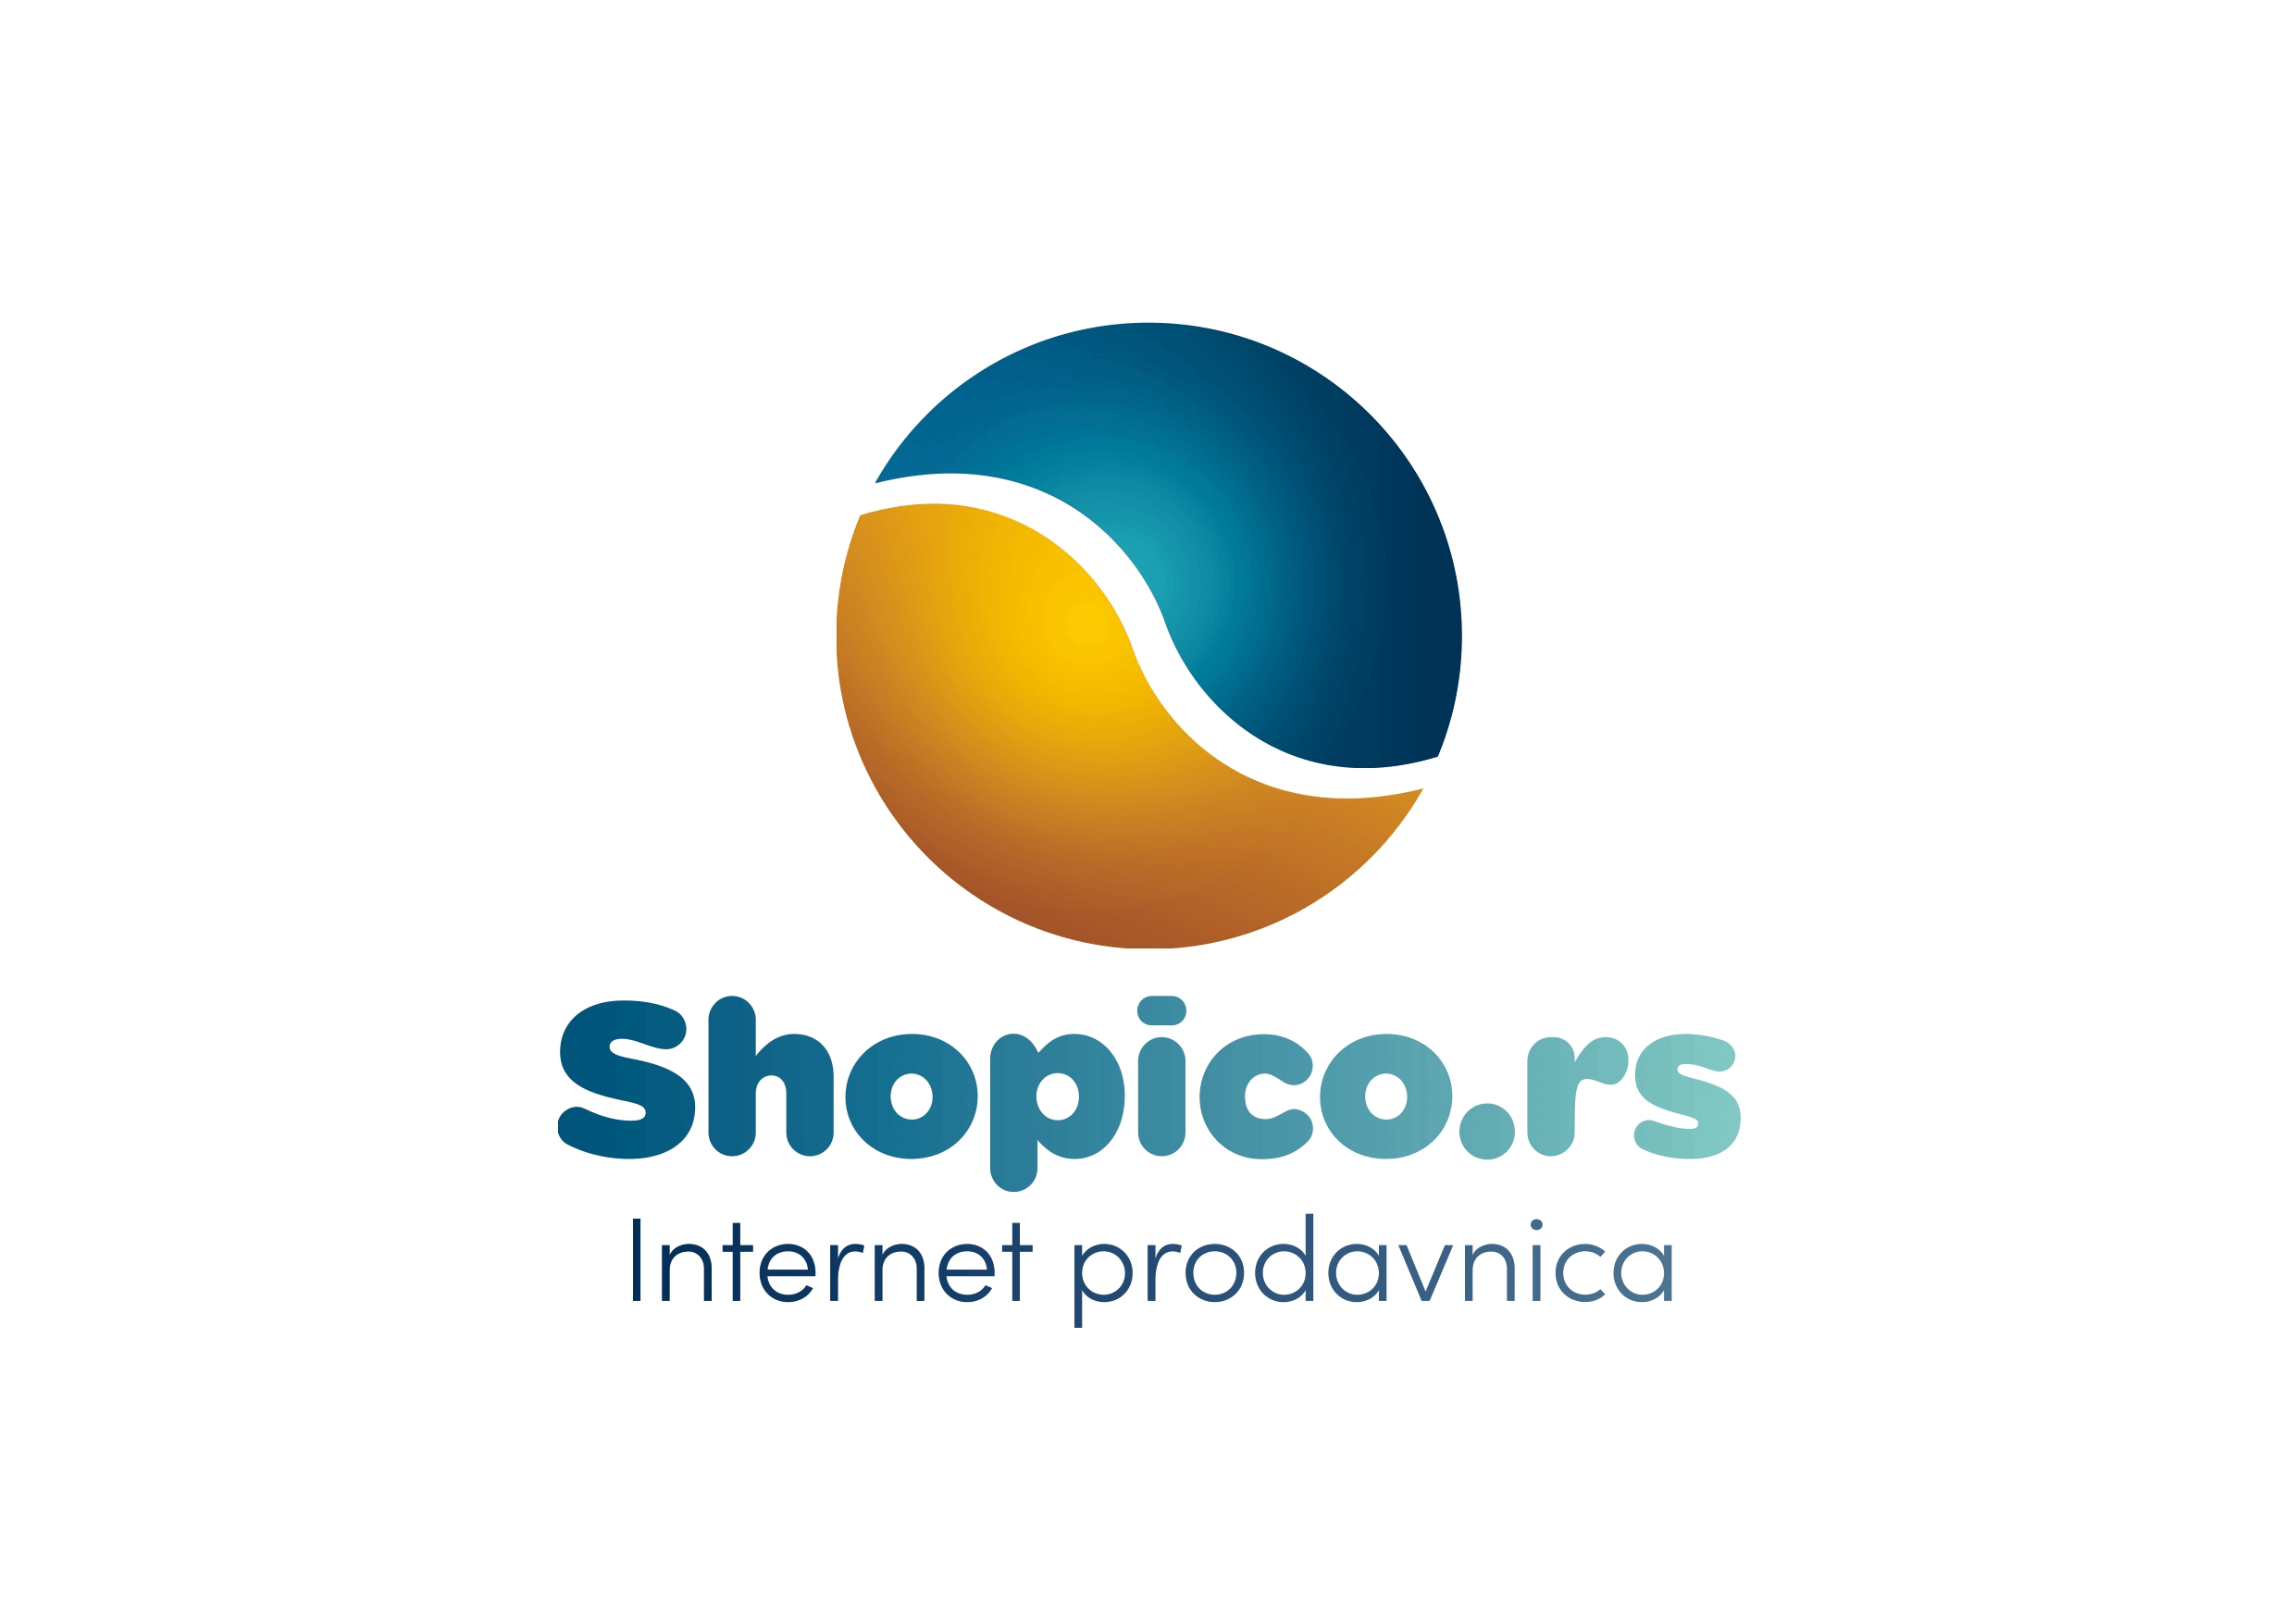 Shopico - Internet prodavnica